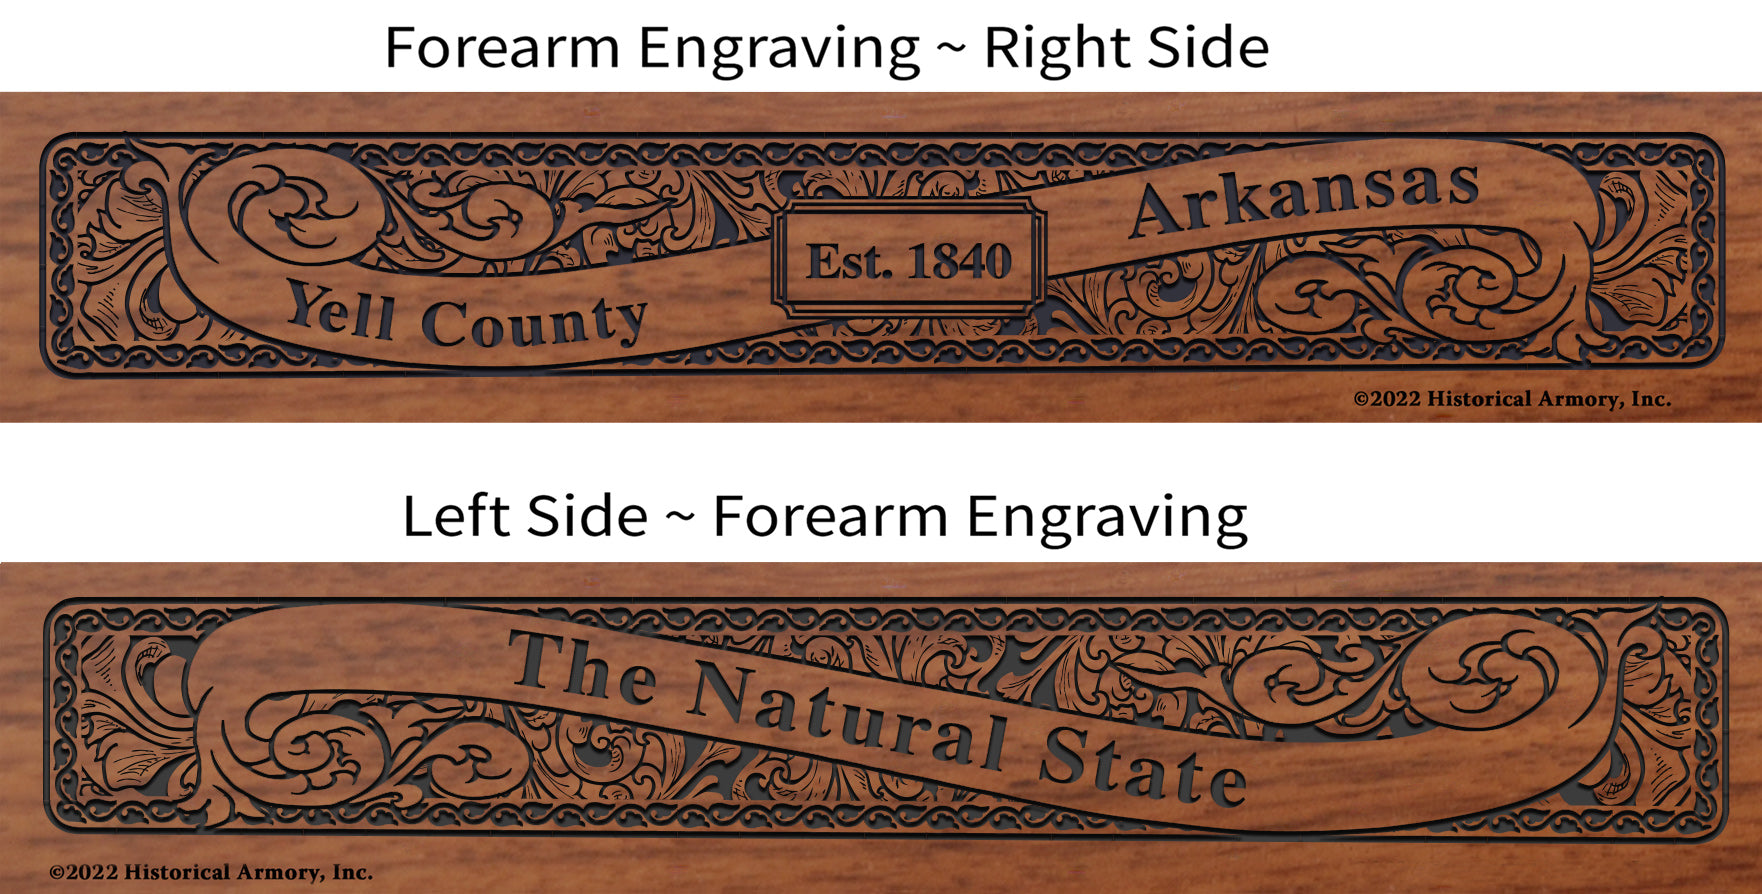 Yell County Arkansas Engraved Rifle Forearm